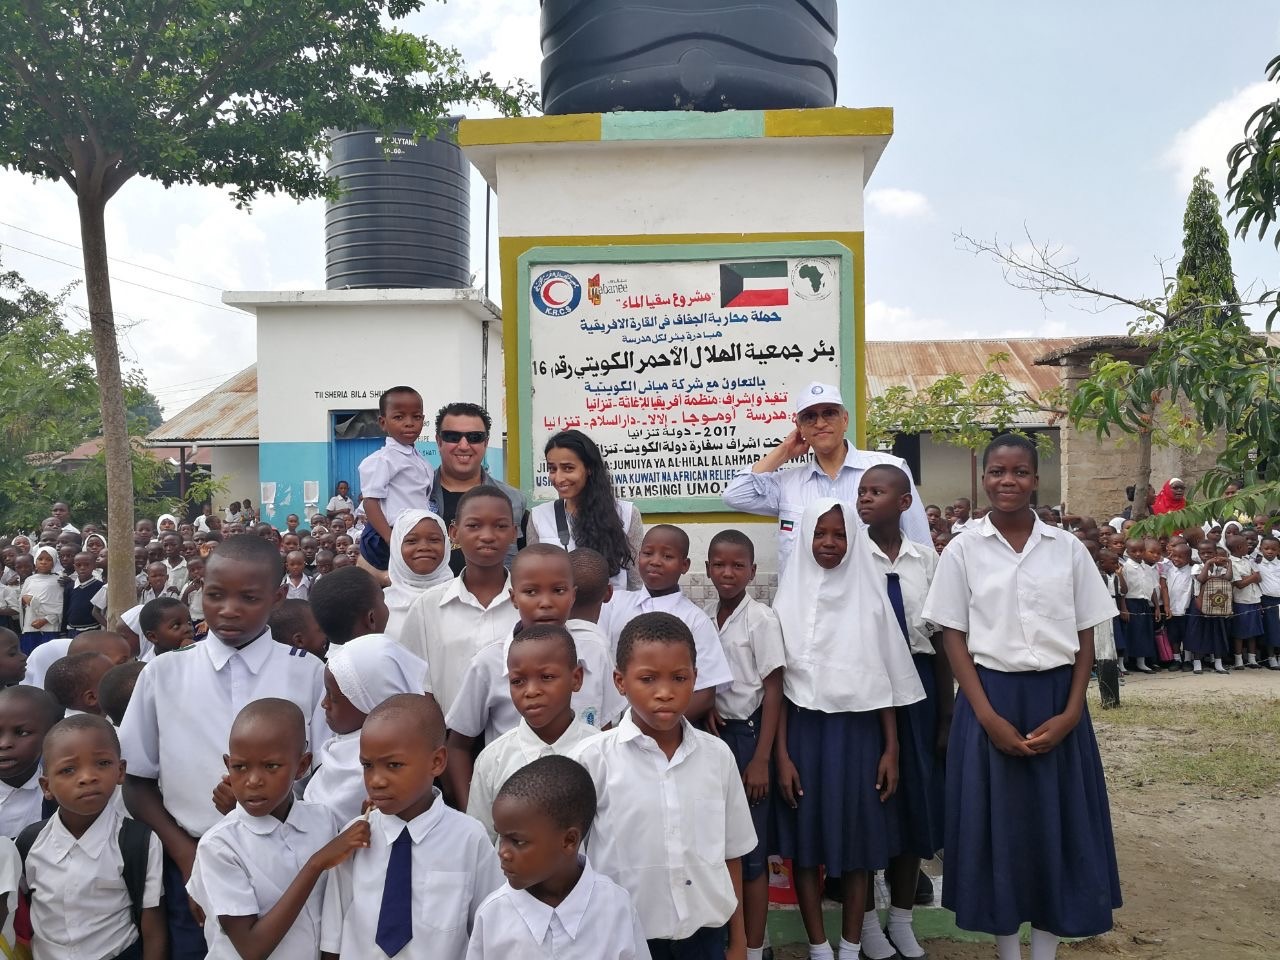 Kuwait inaugurates 16 water wells in Tanzania schools